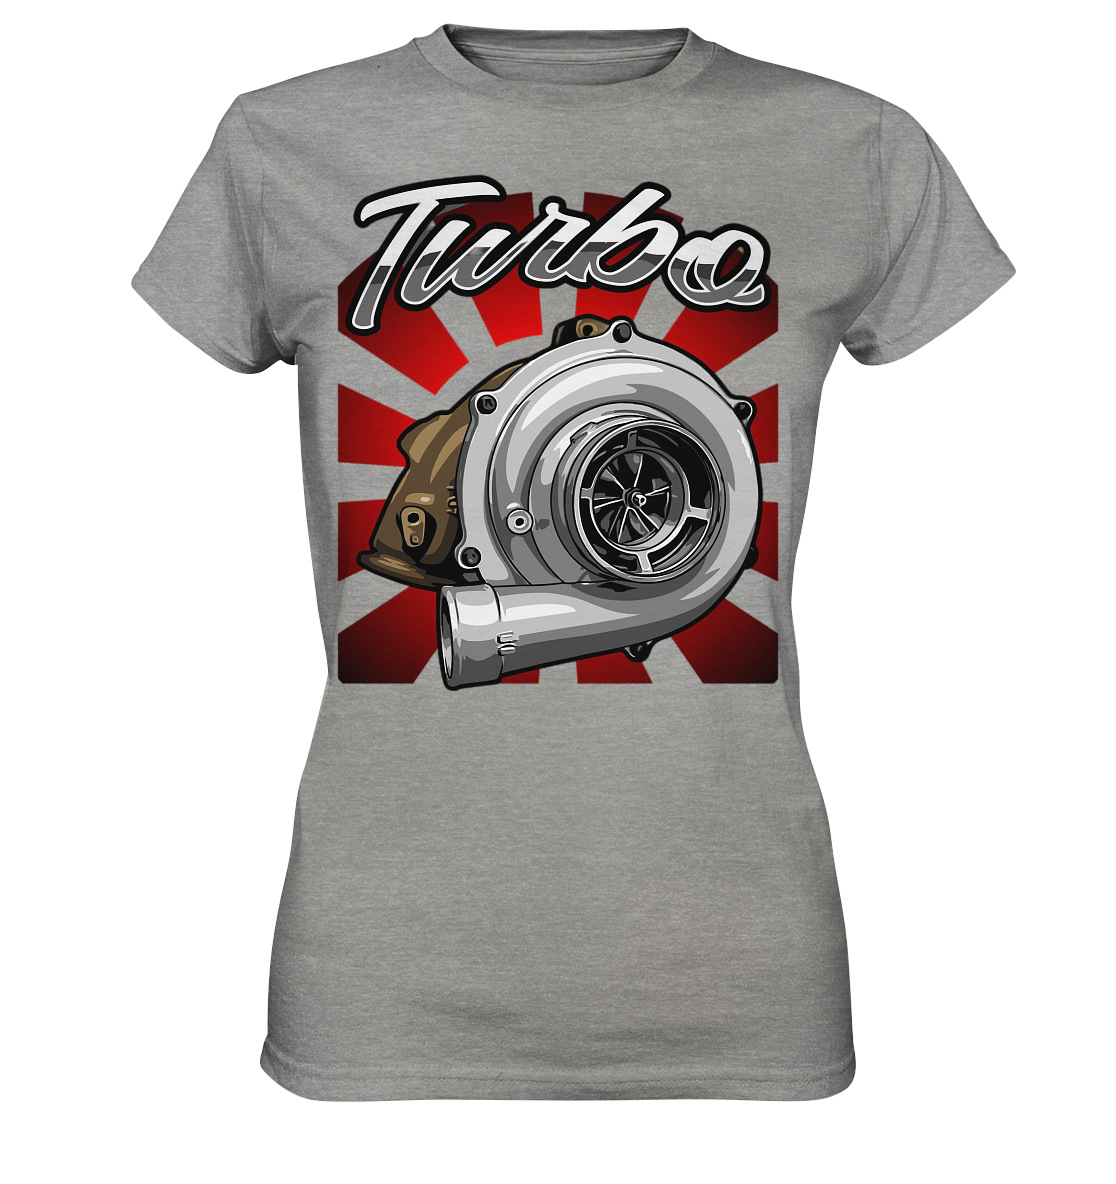 Turbo Inside - Ladies Premium Shirt